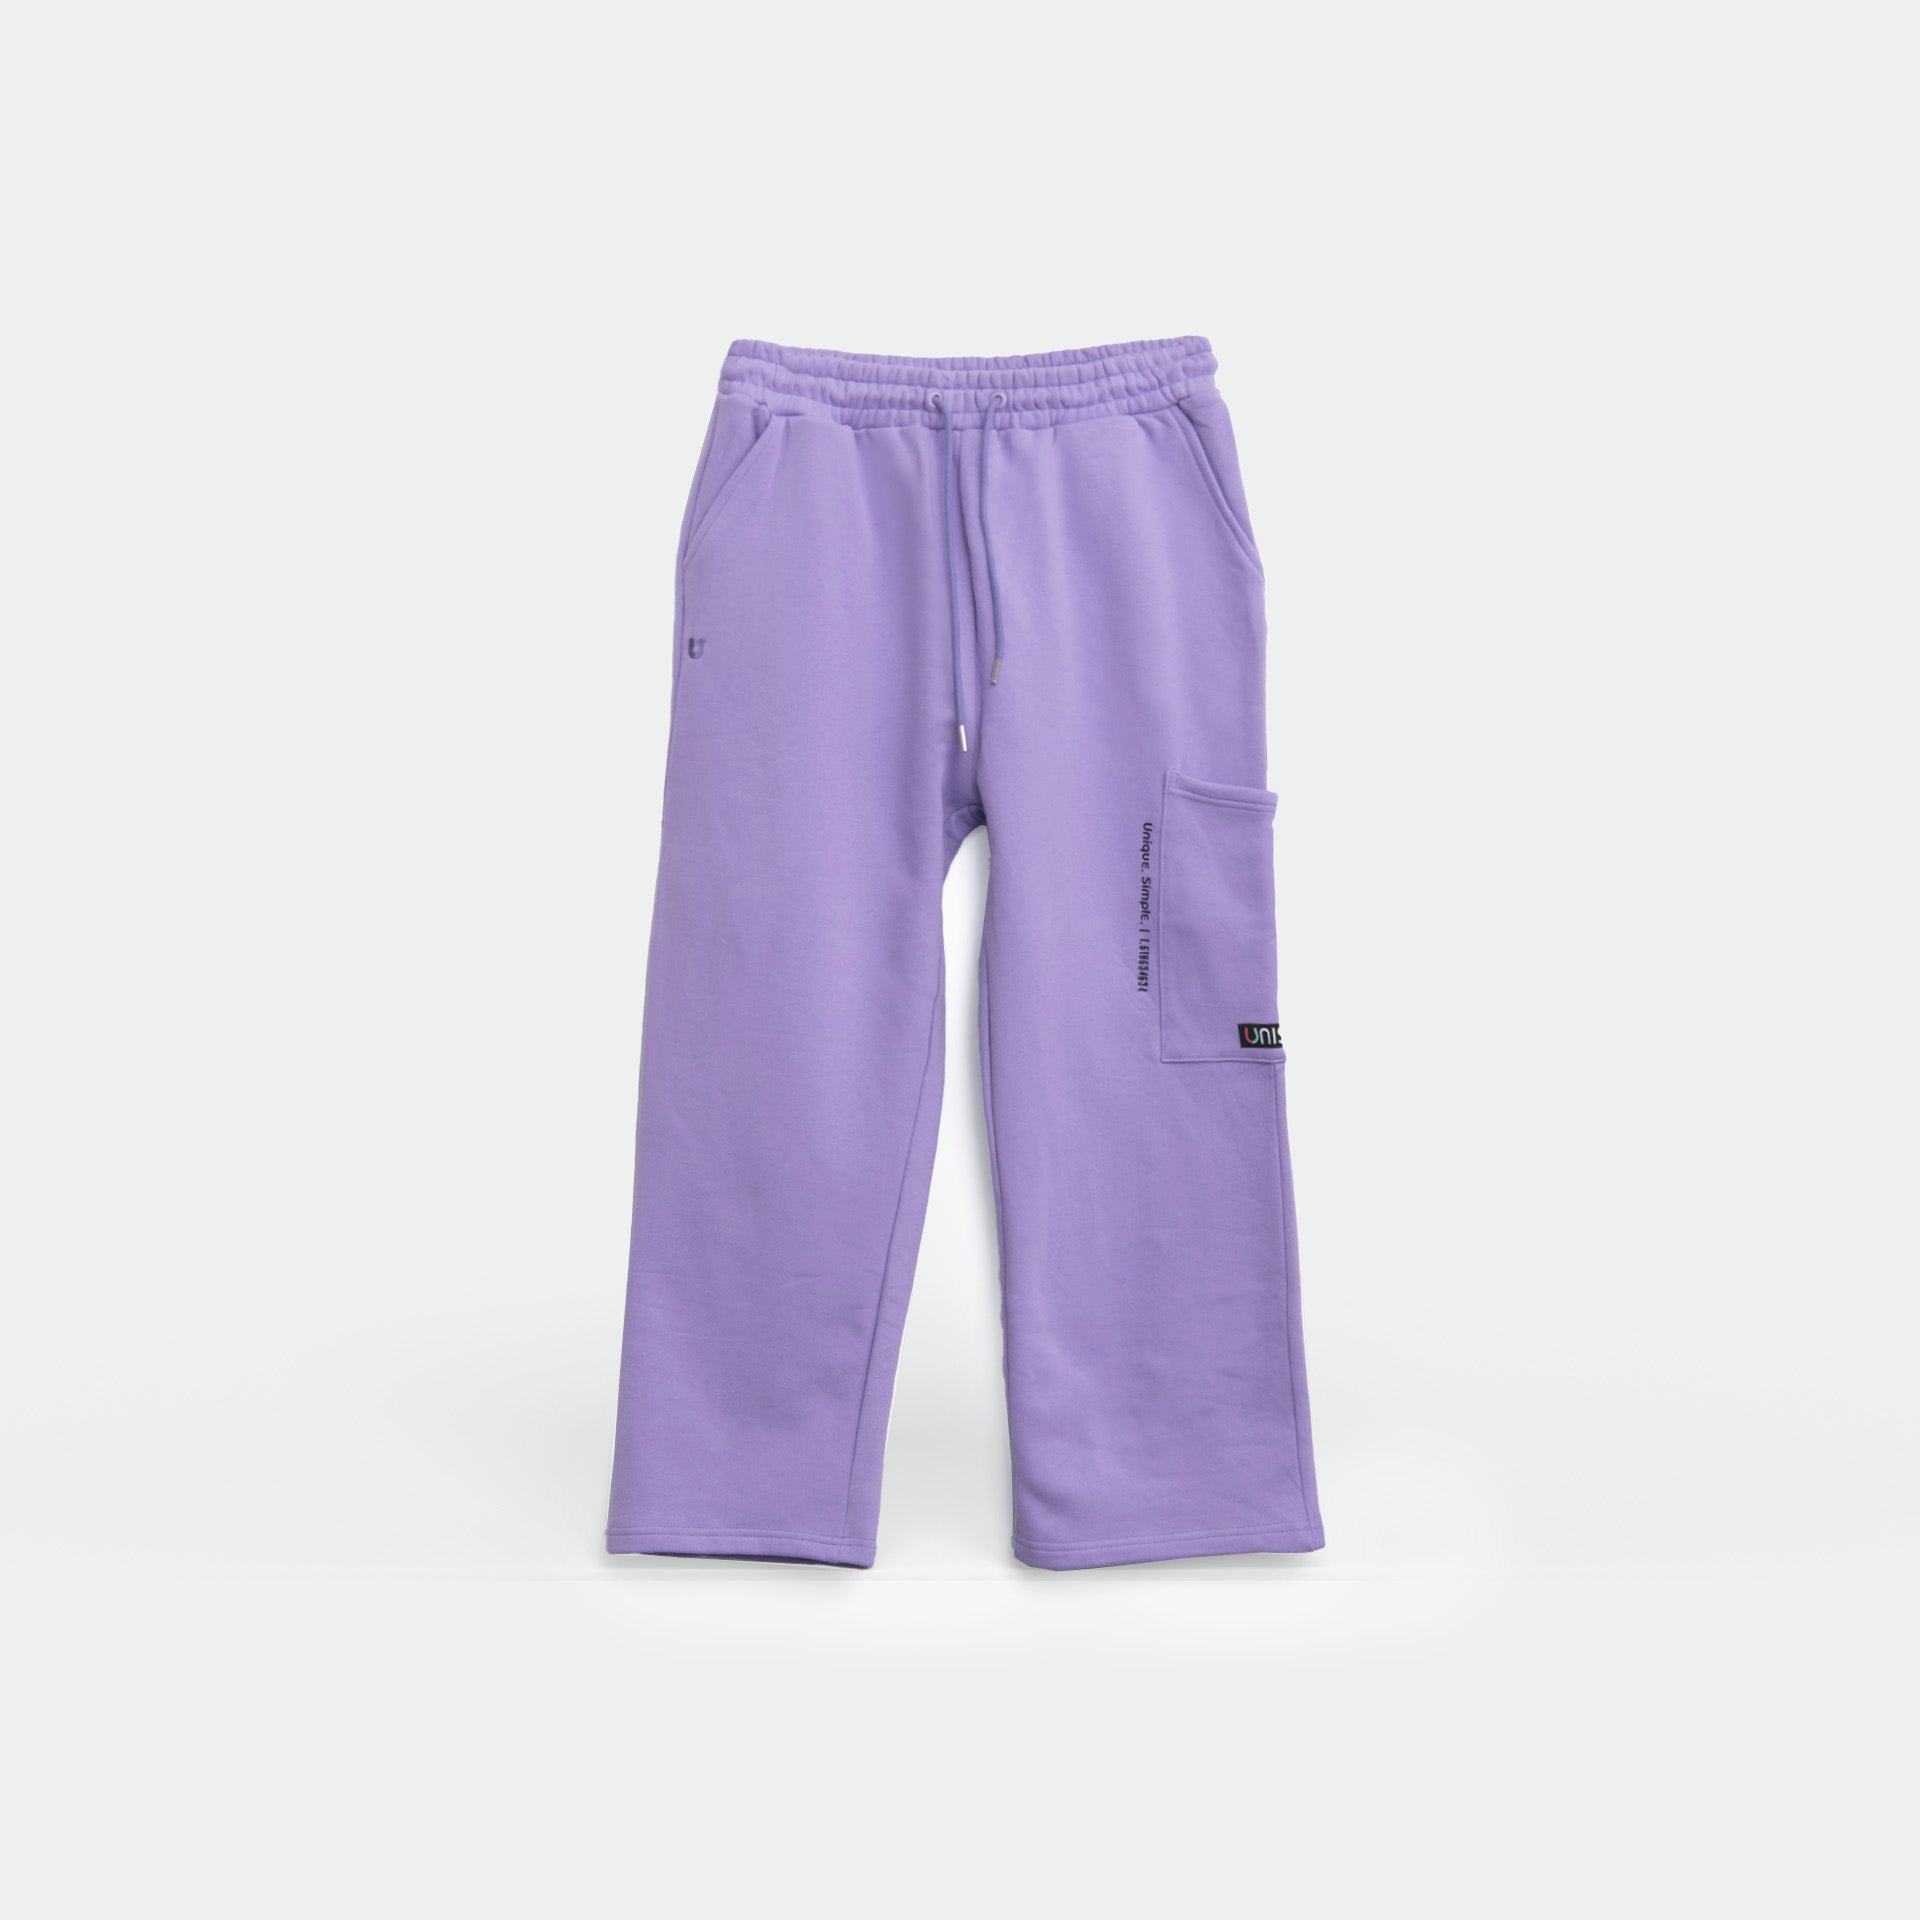 Purple Sweatpants From Unisi